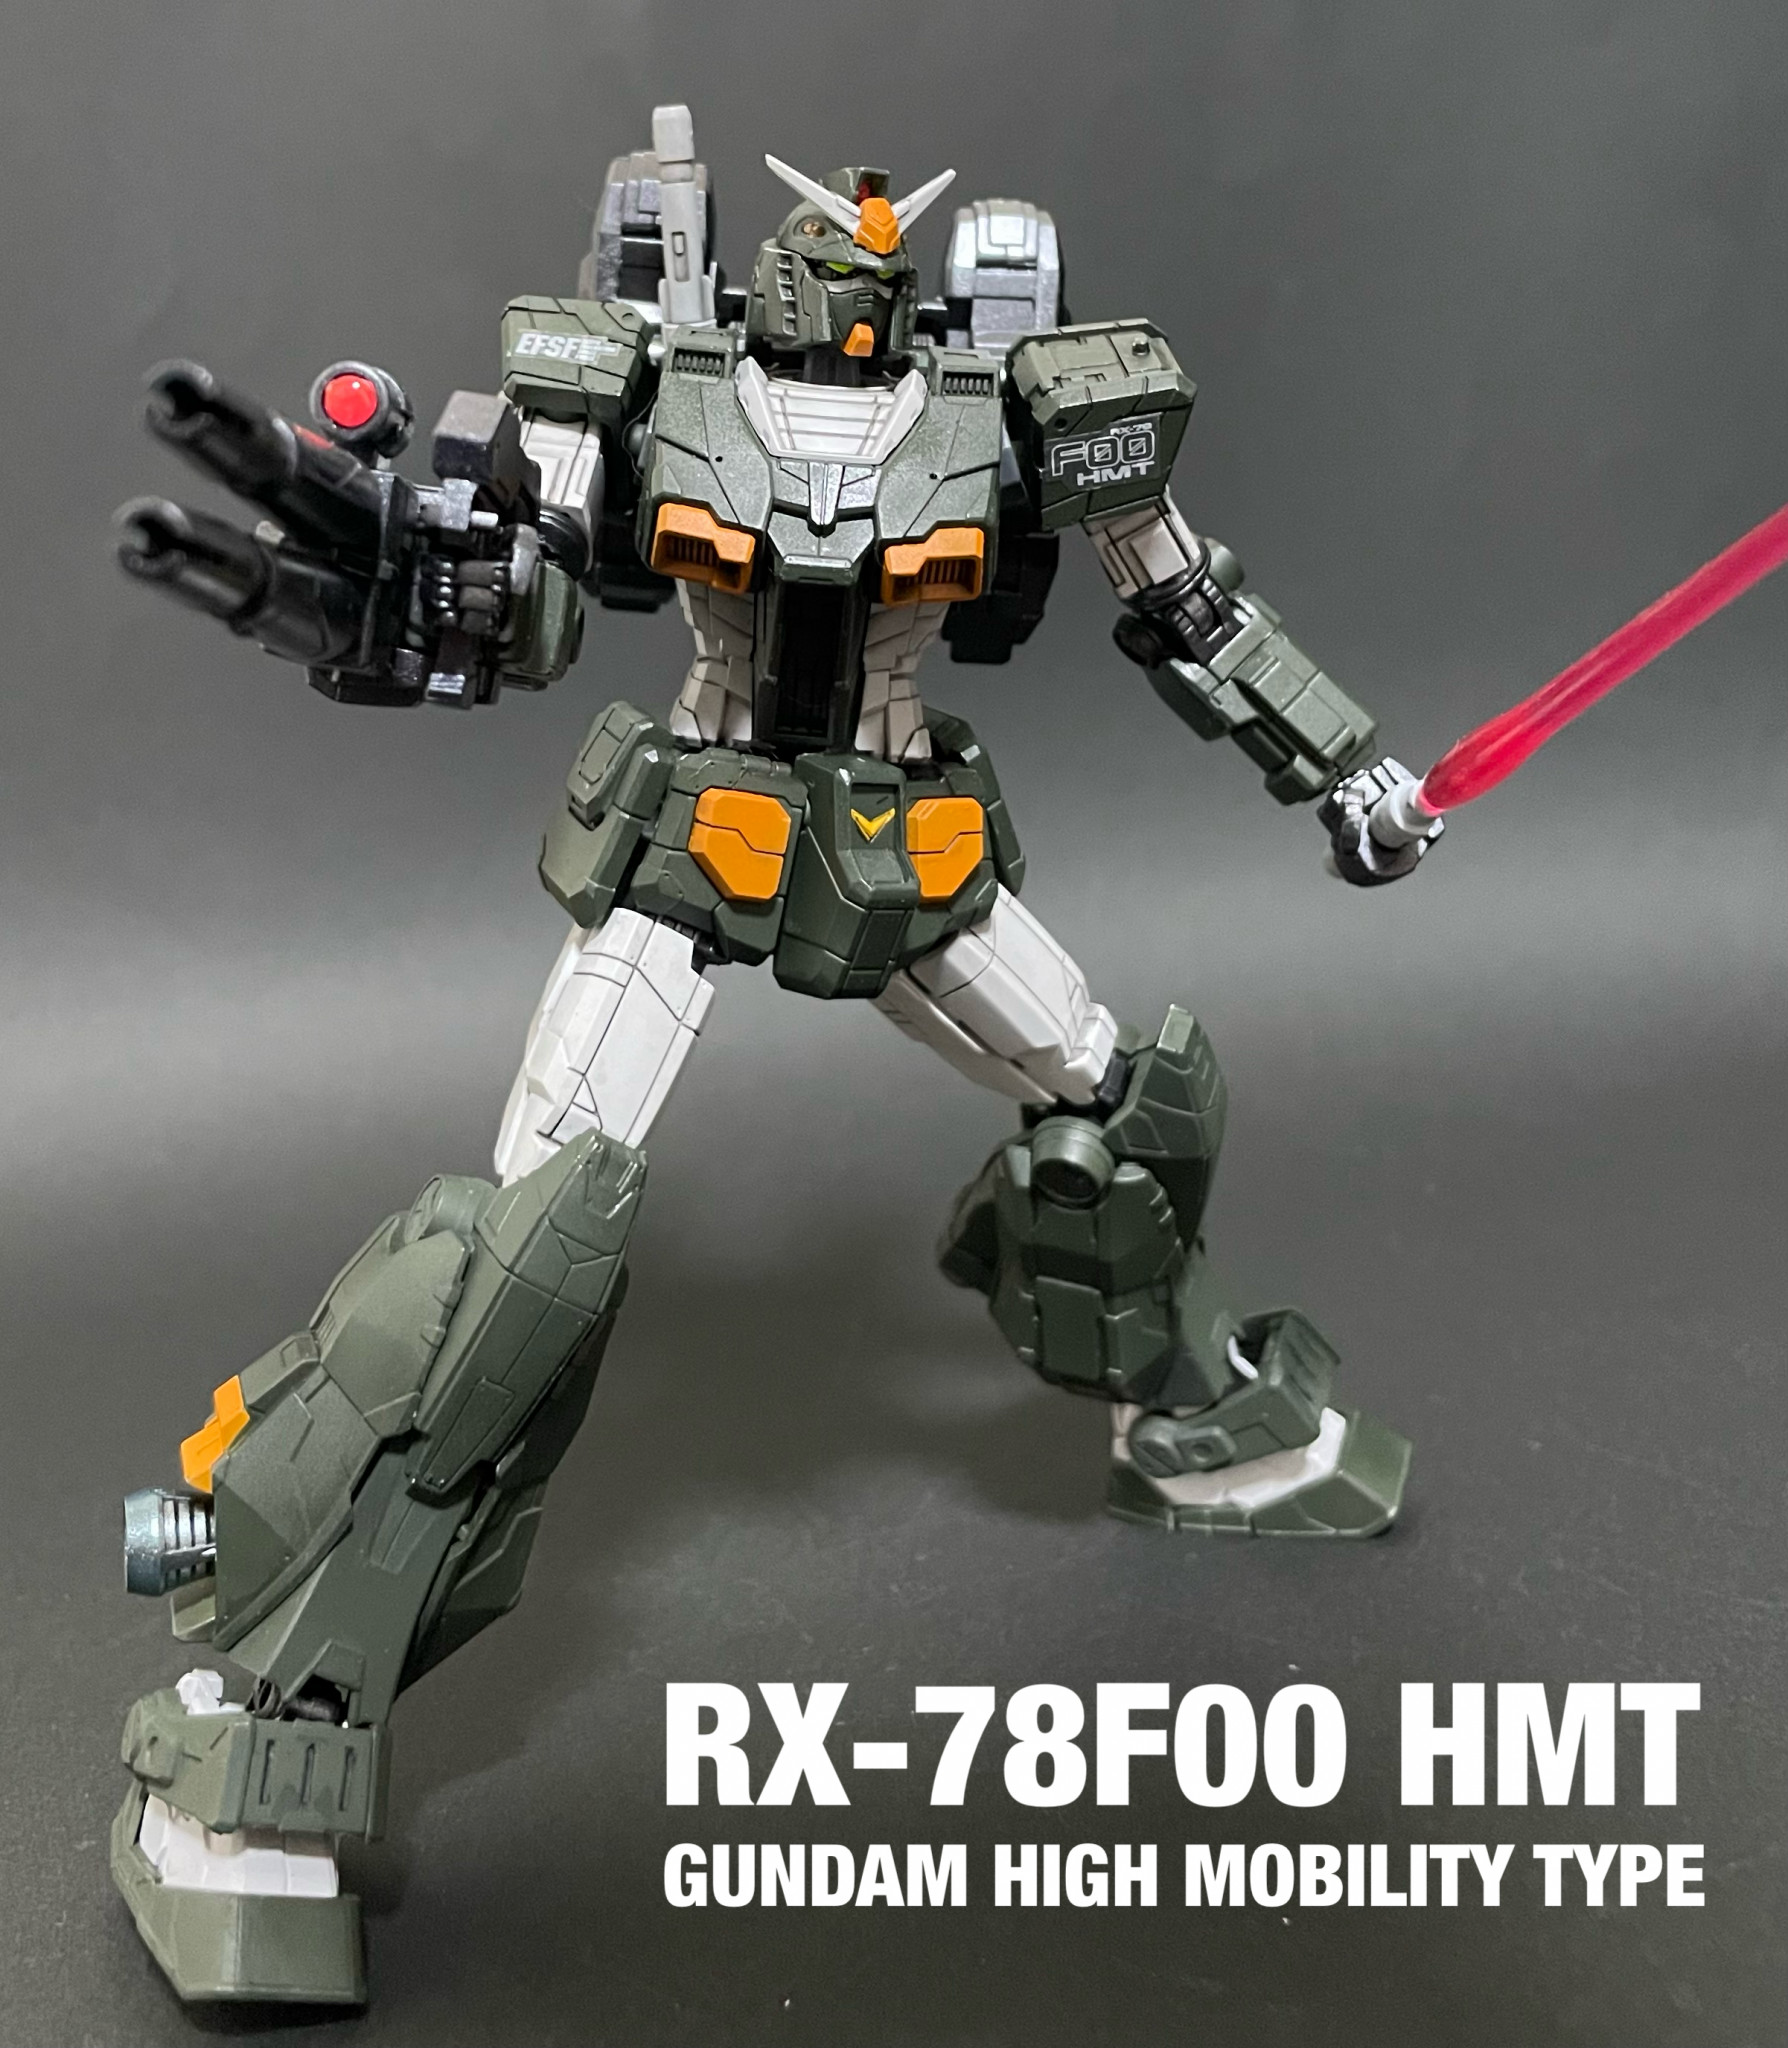 RX-78F00 HMTガンダム高機動型｜awaさんのガンプラ作品｜GUNSTA 